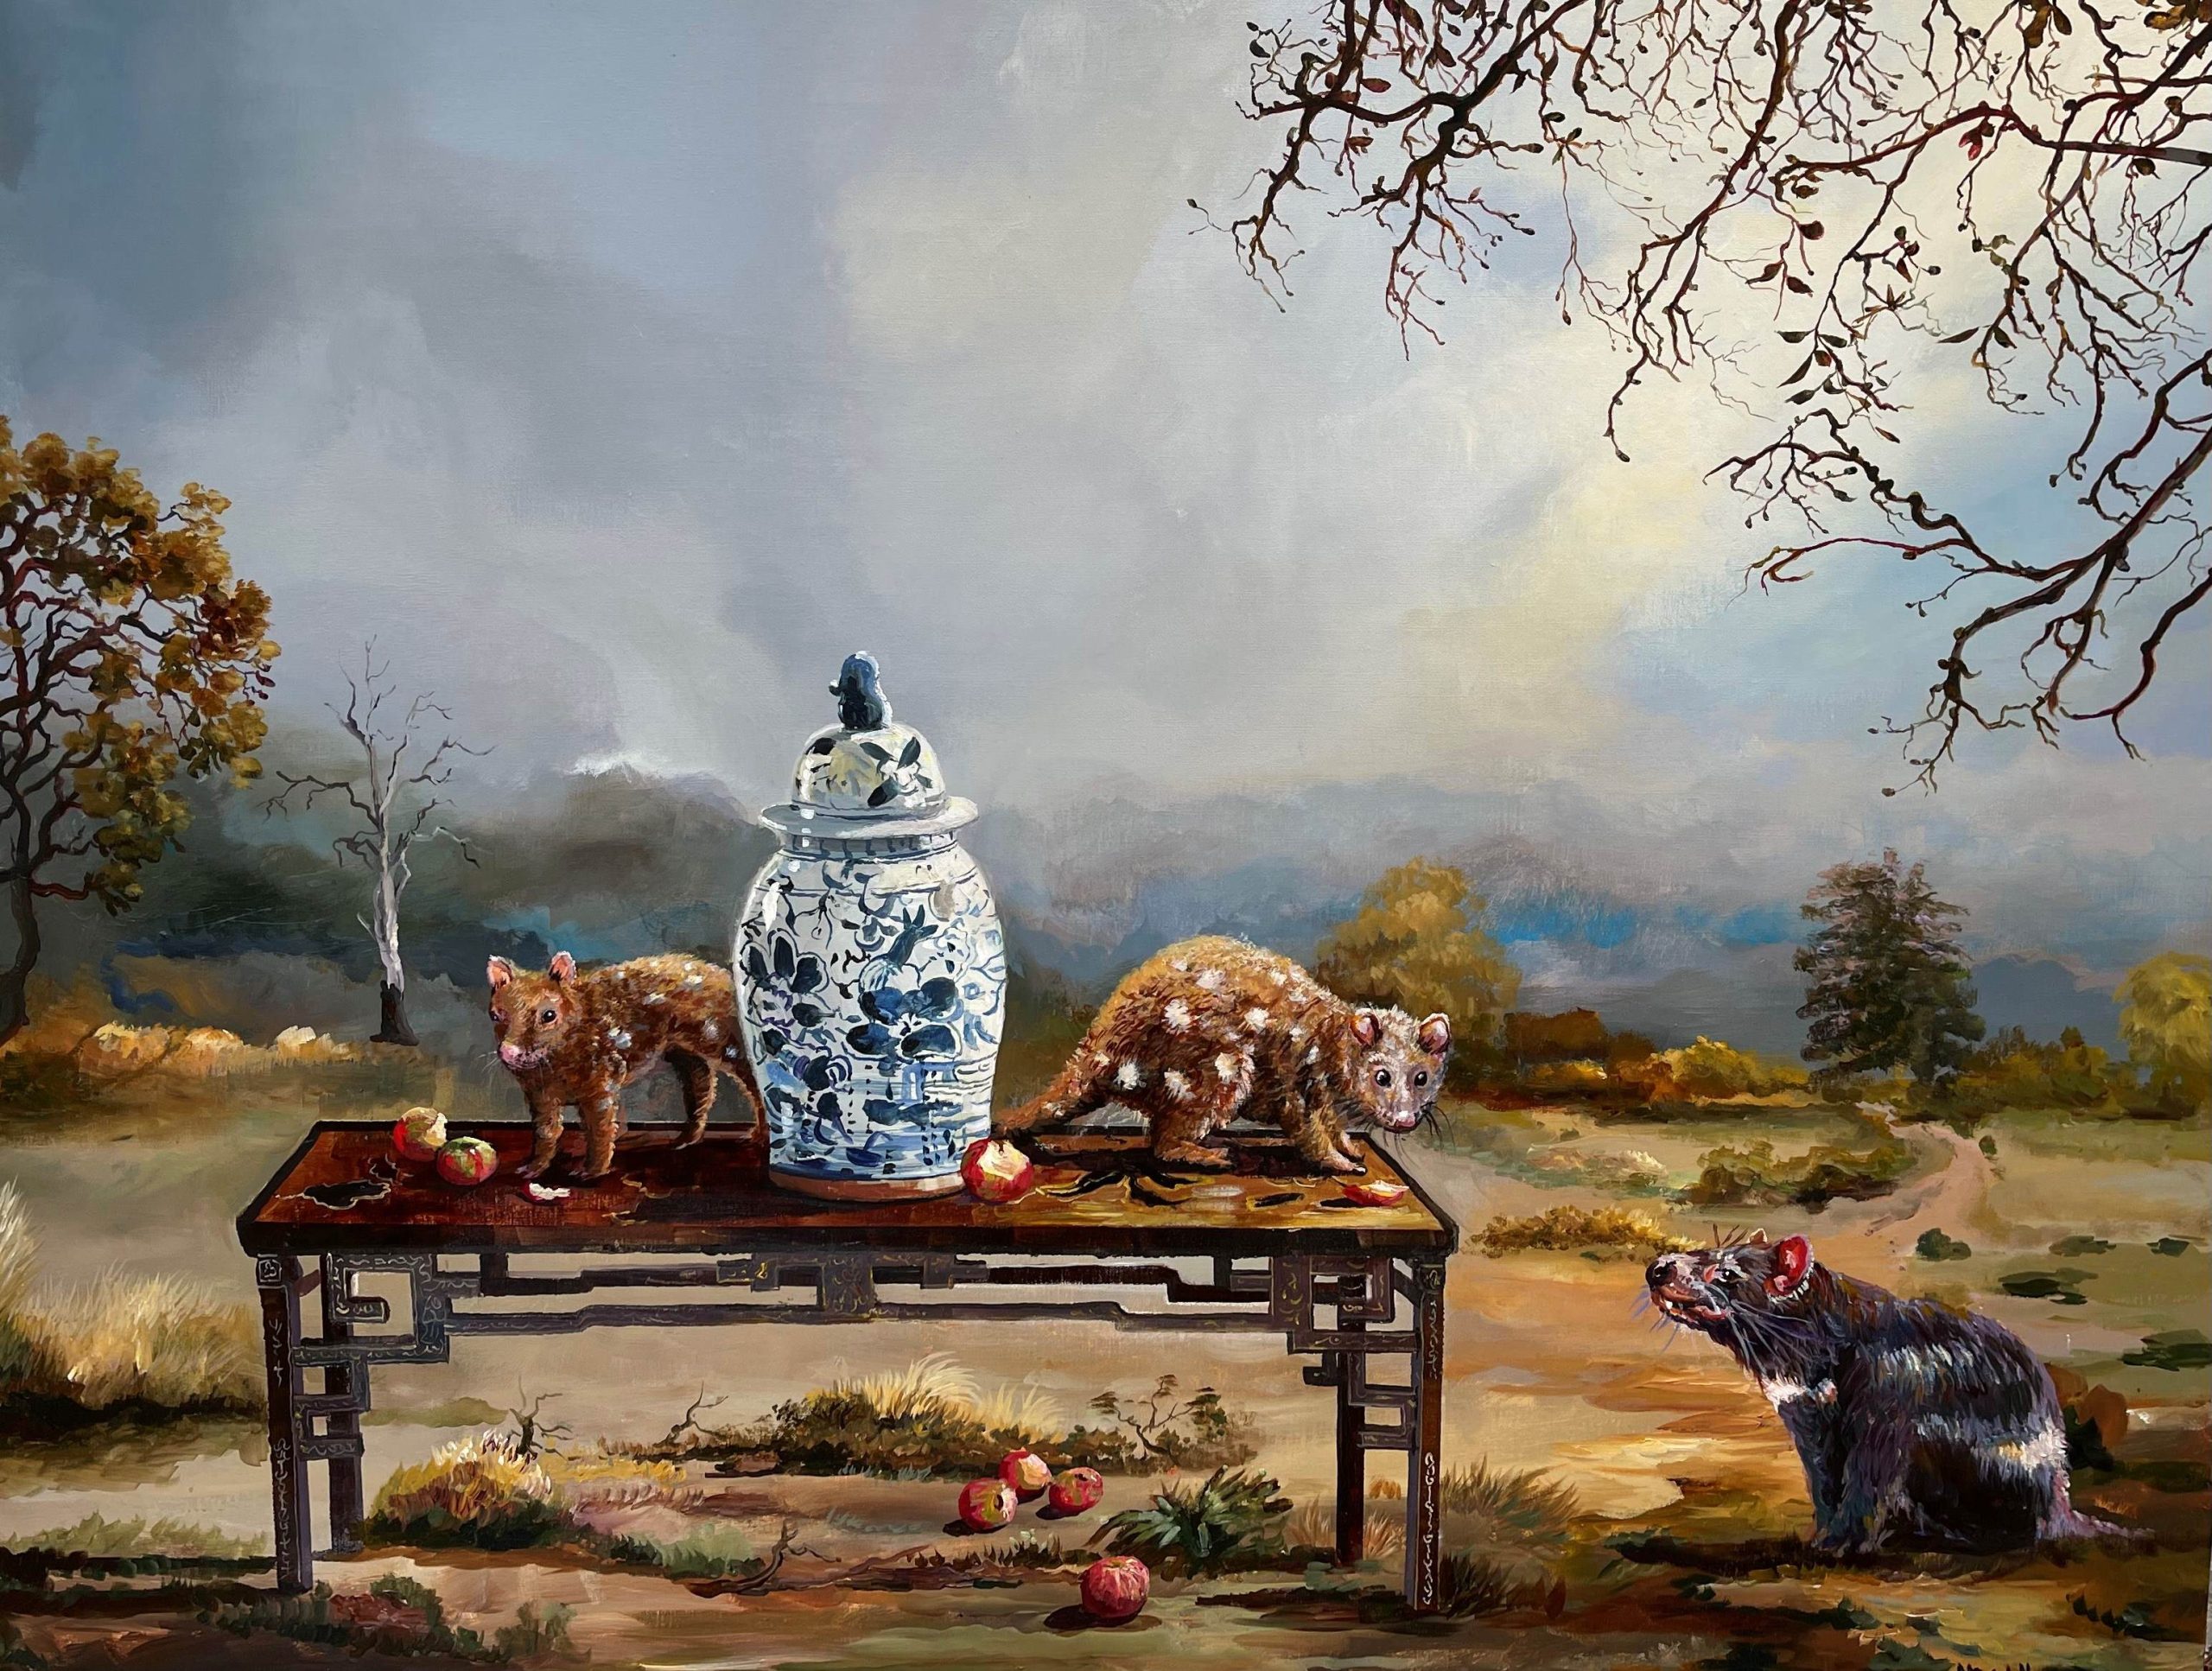 Melissa Egan 'Battle of the Quolls' acrylic on linen 92 x 122cm $16,000